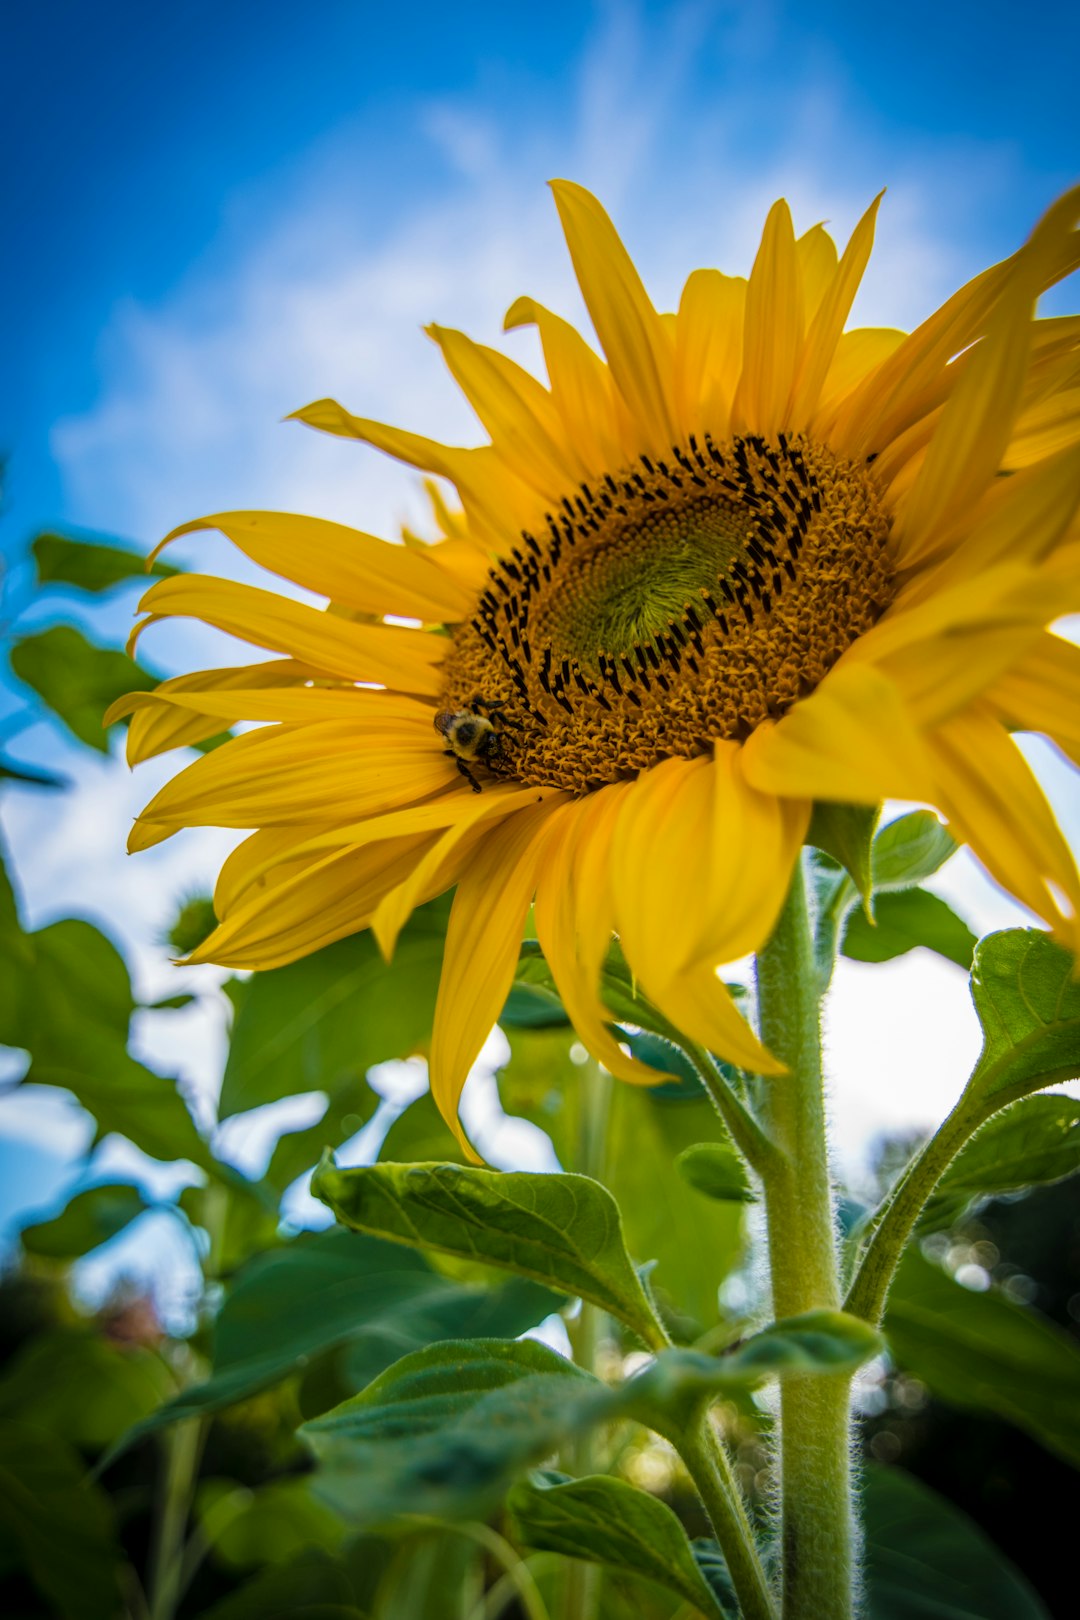 worm-s-eye-view-of-yellow-sunflower-photo-free-sunflower-image-on